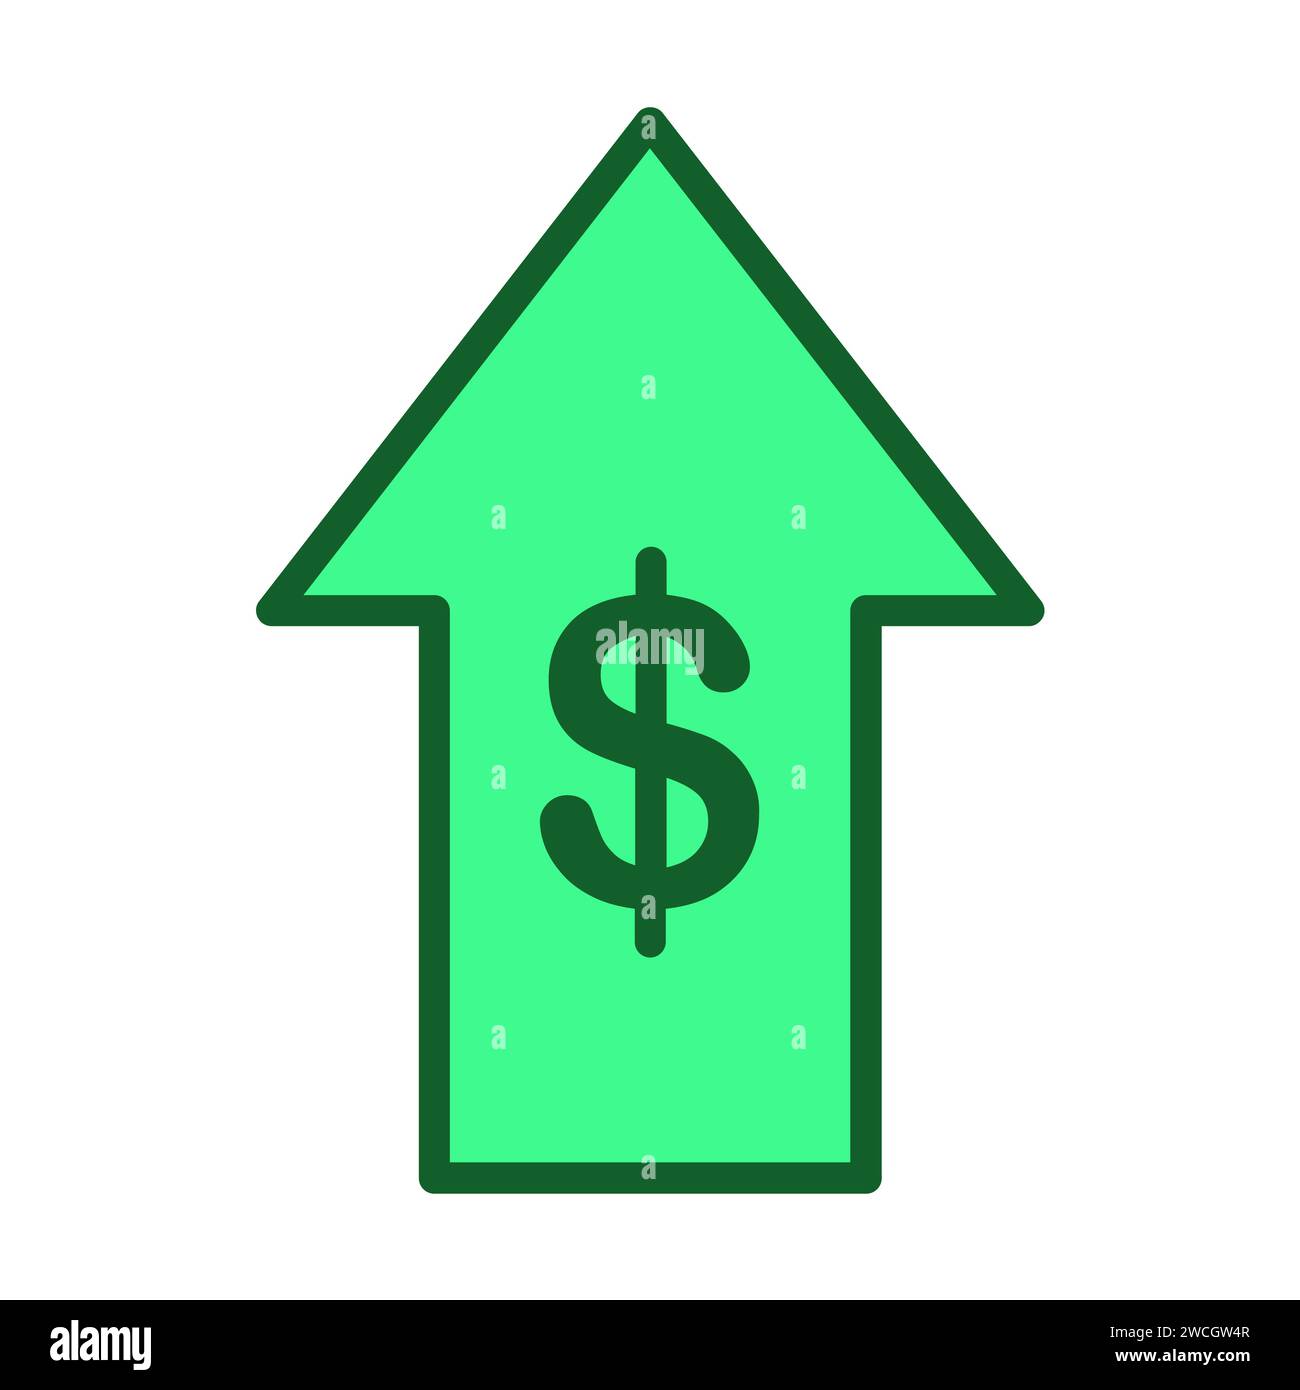 Green Arrow Up With Dollar Symbol Stock Vector